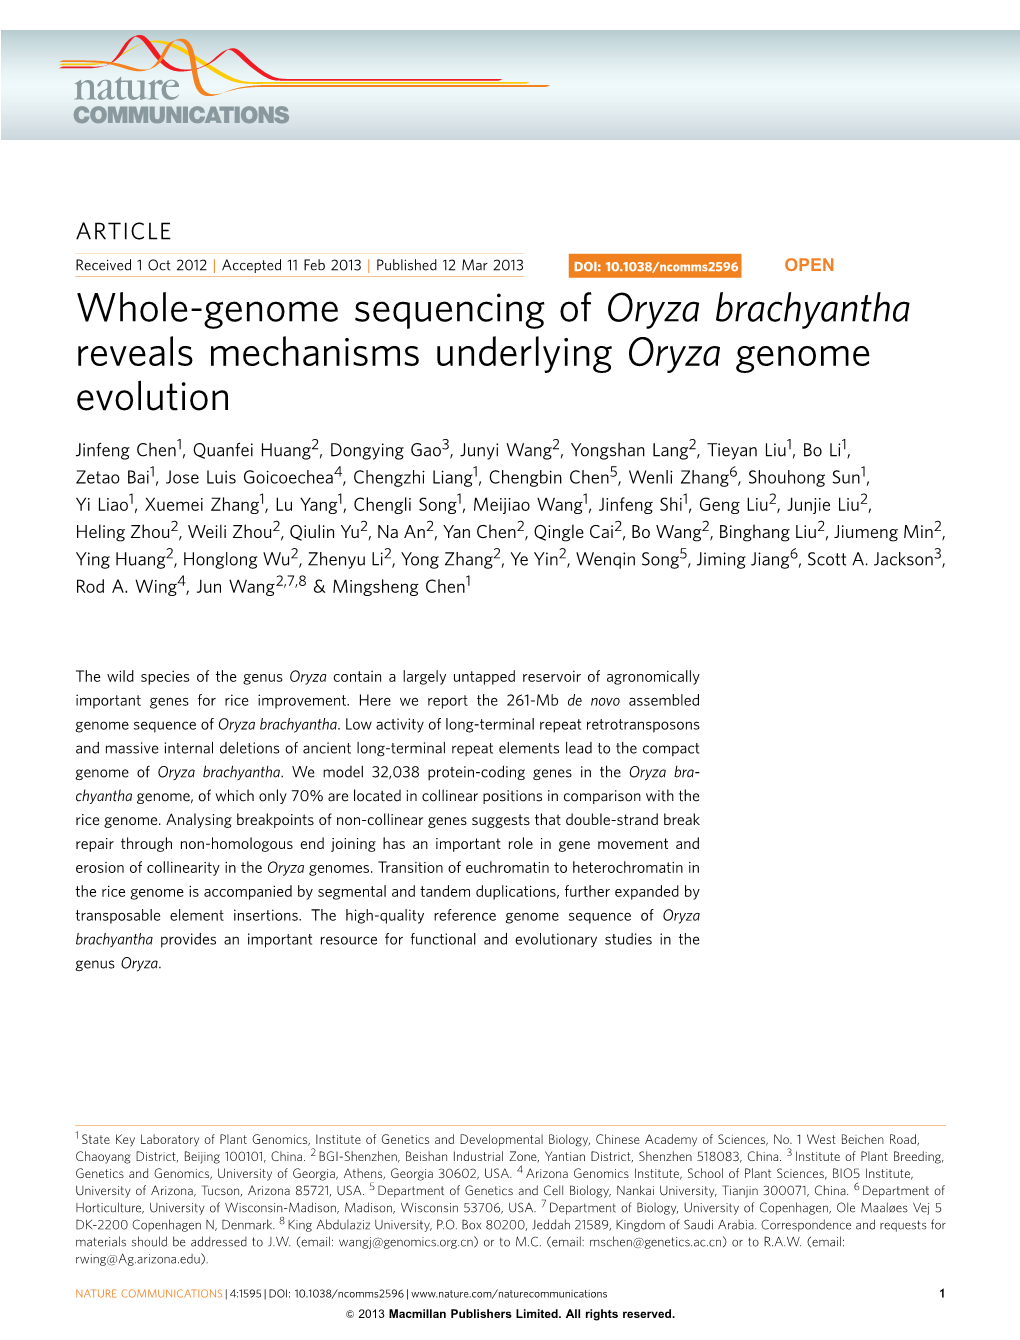 Whole-Genome Sequencing of Oryza Brachyantha Reveals Mechanisms Underlying Oryza Genome Evolution